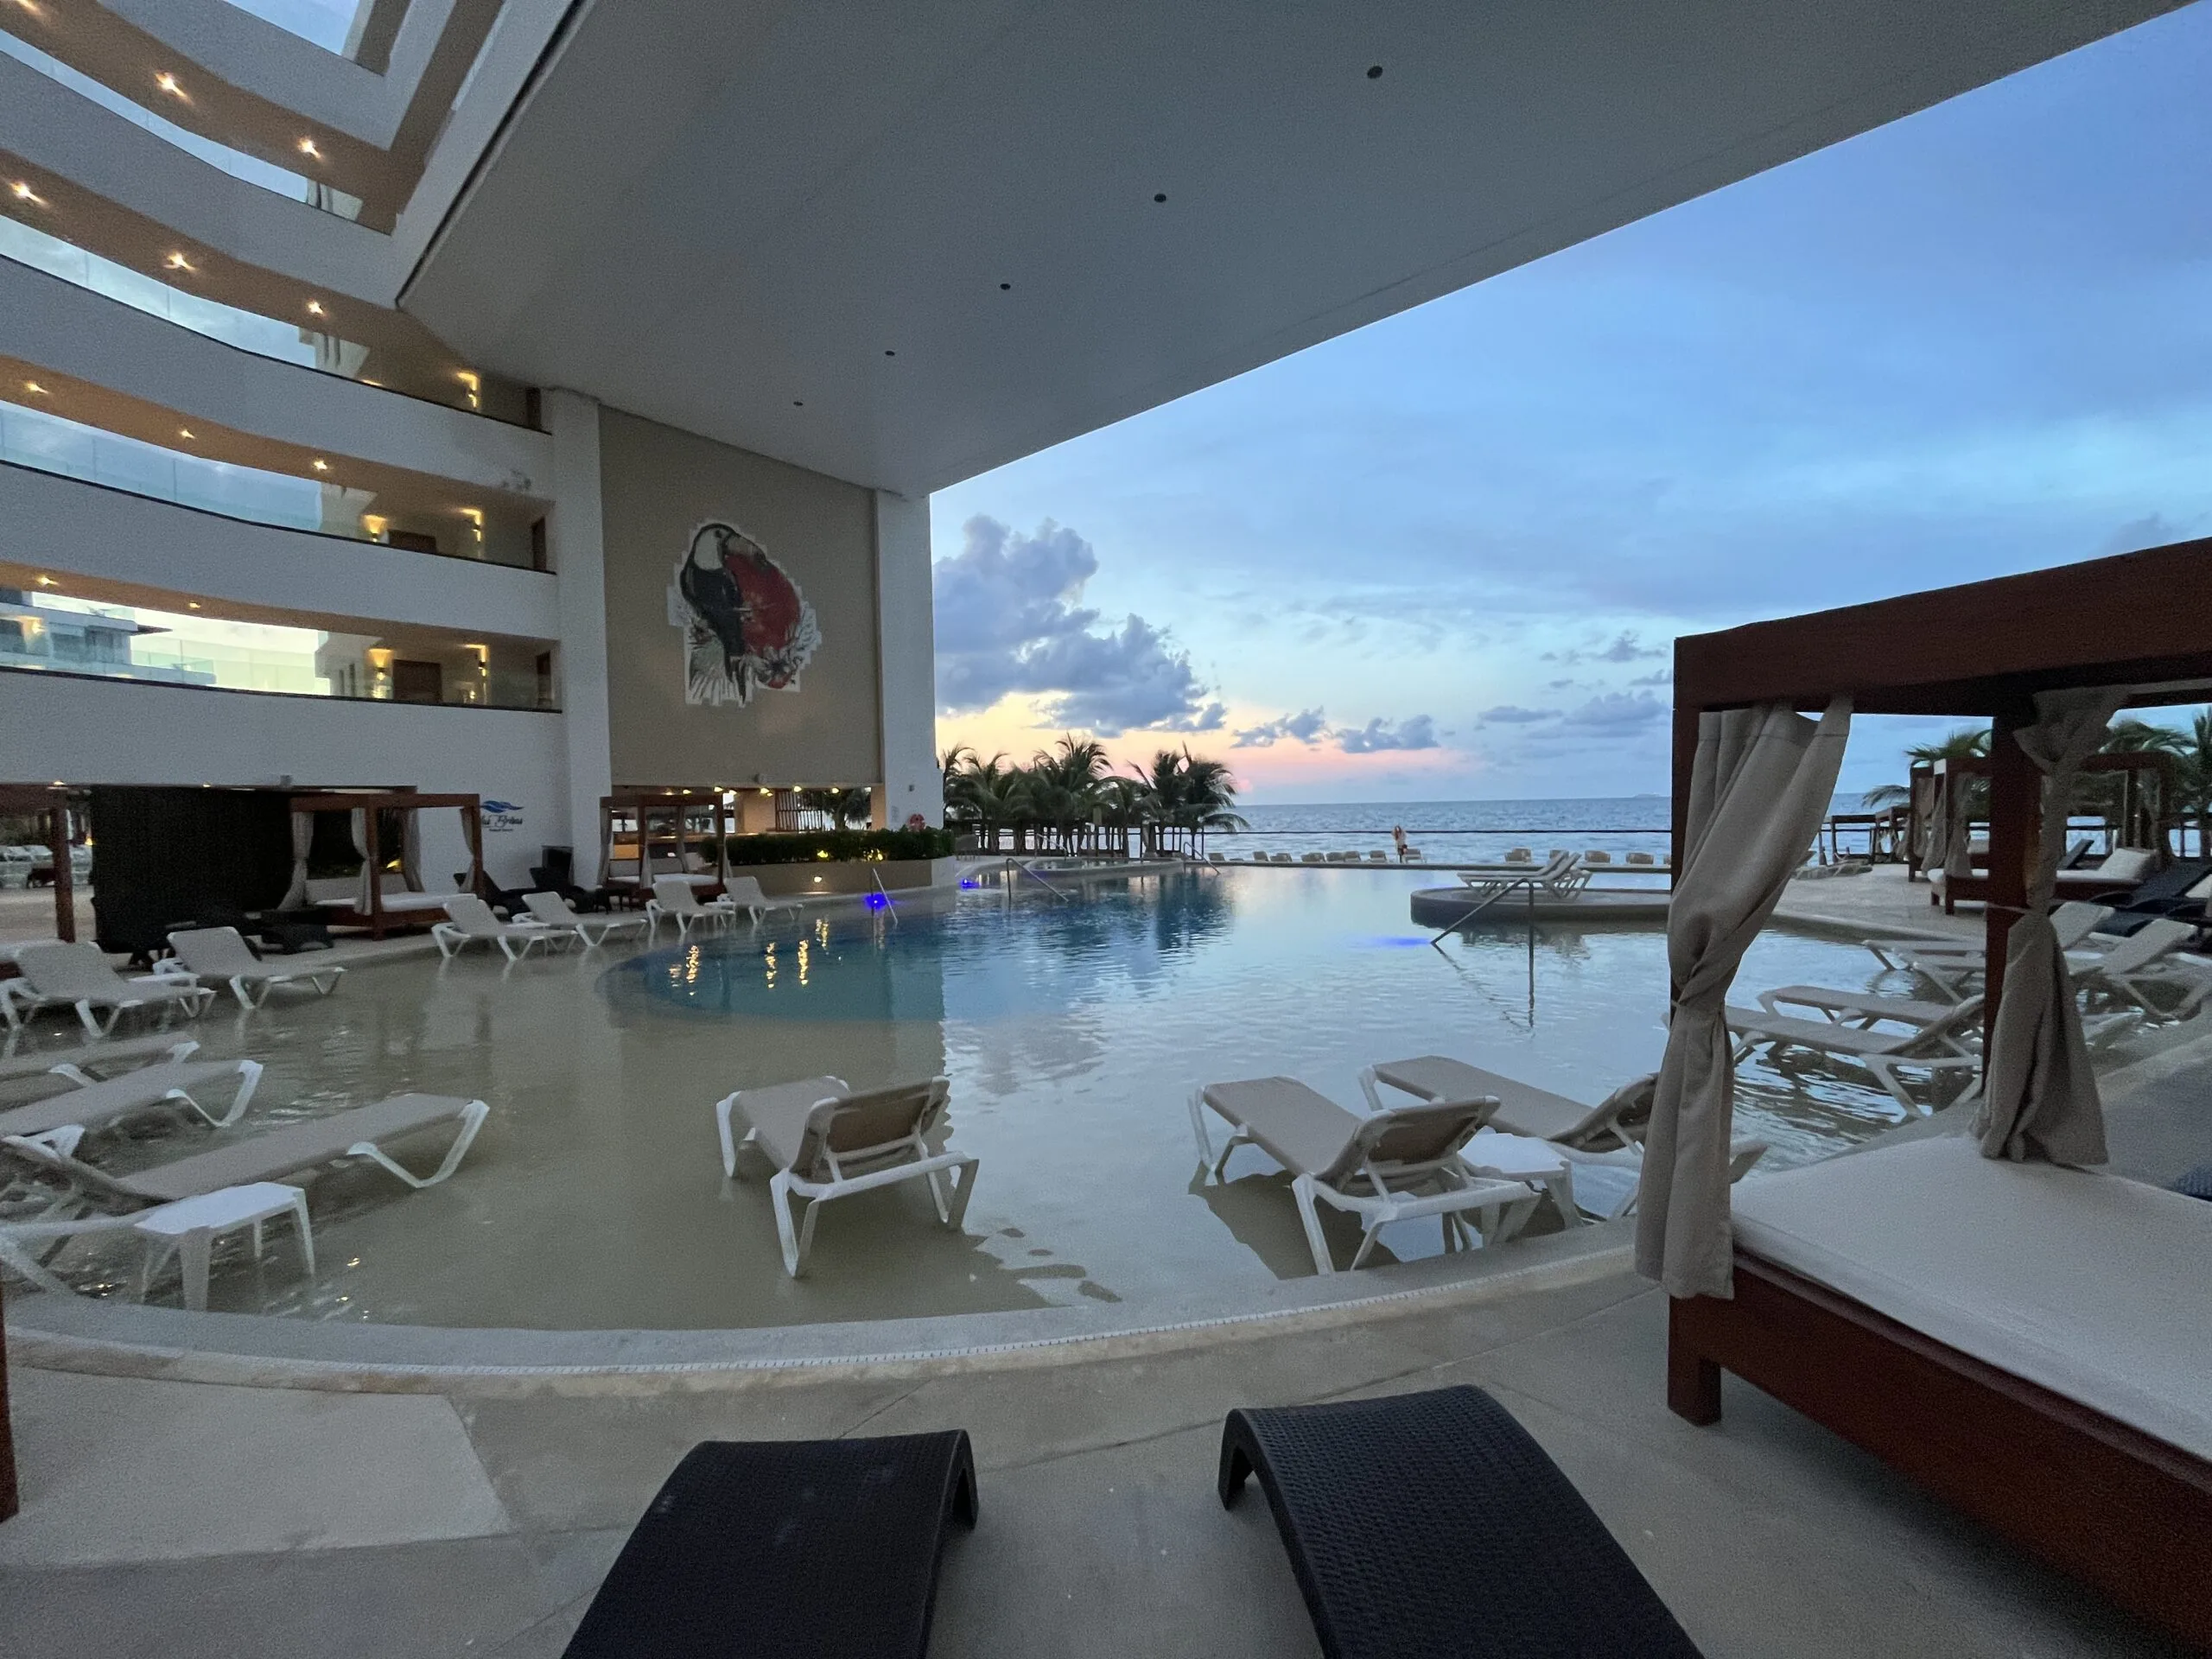 The pool deck below the overhang with oceanfront rooms at Sensira resort in Riviera Maya